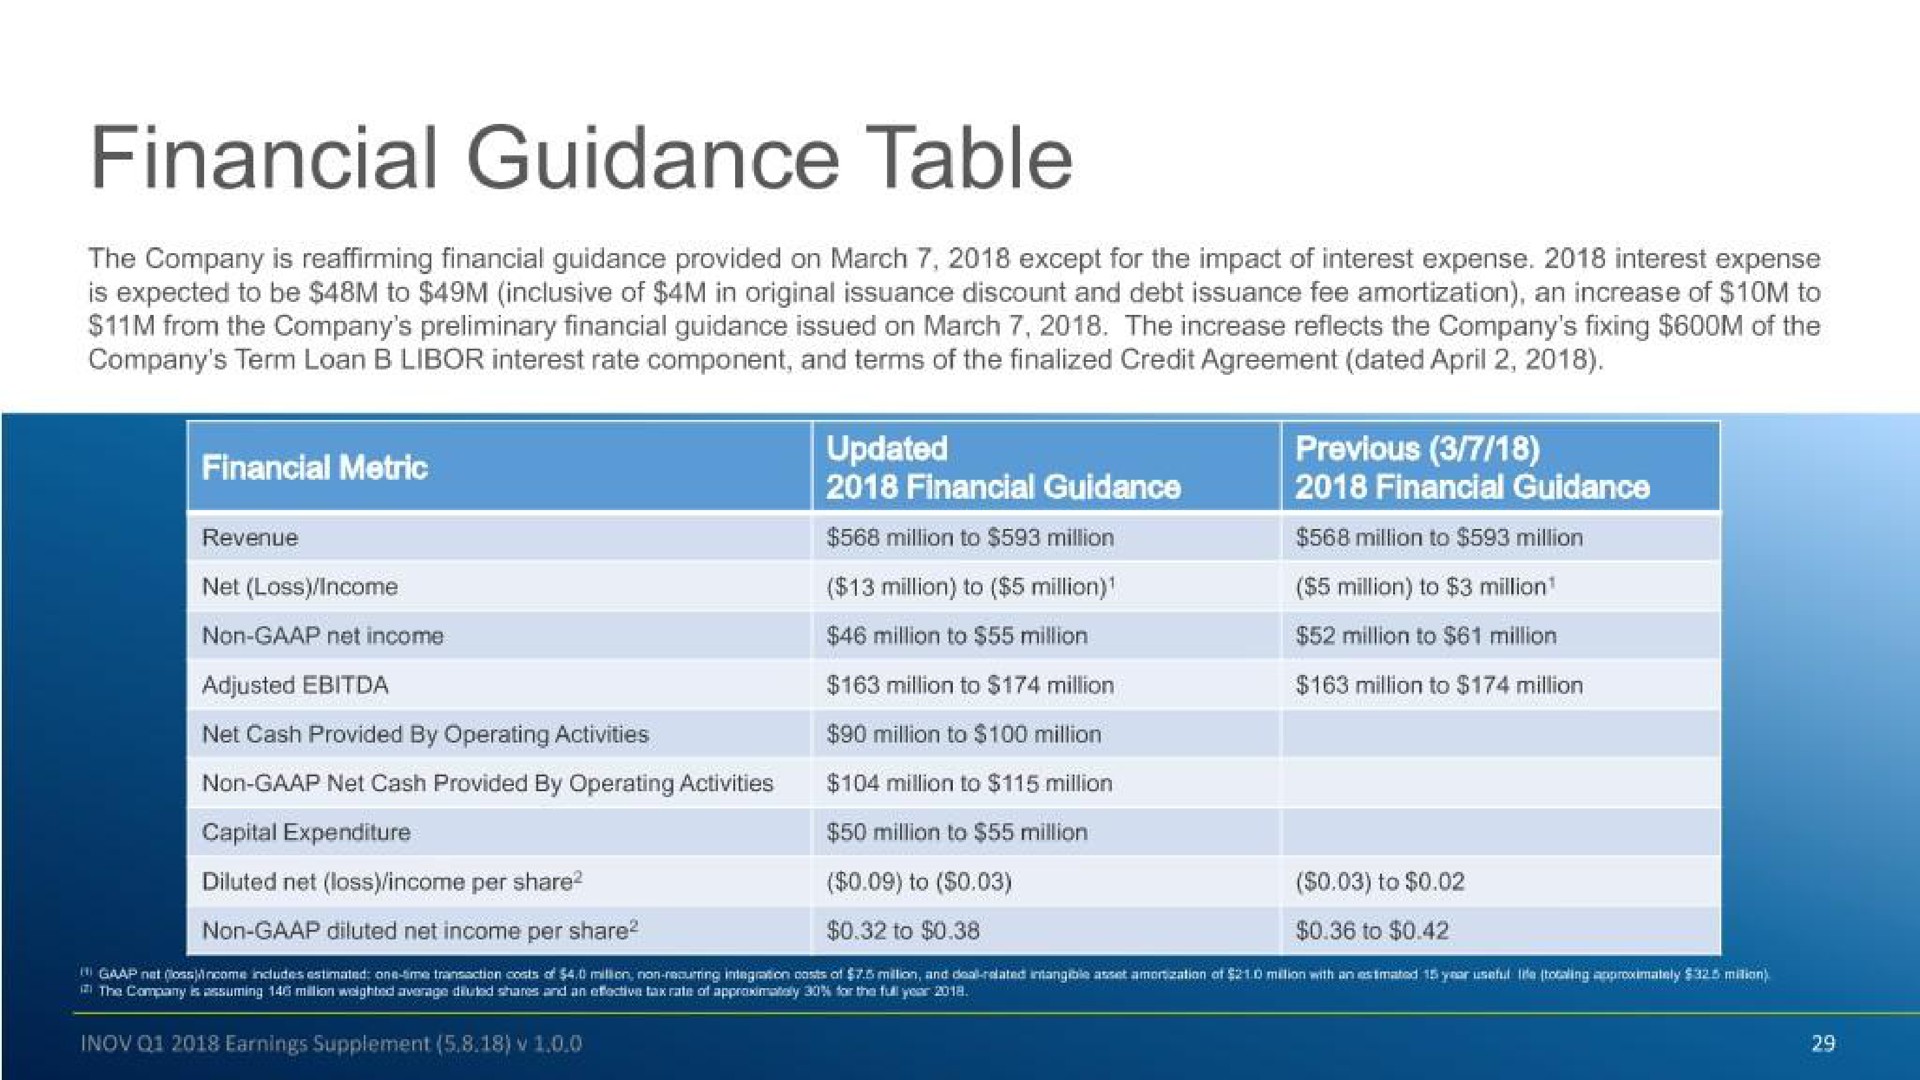 financial guidance table financial metric financial guidance previous financial guidance | Inovalon